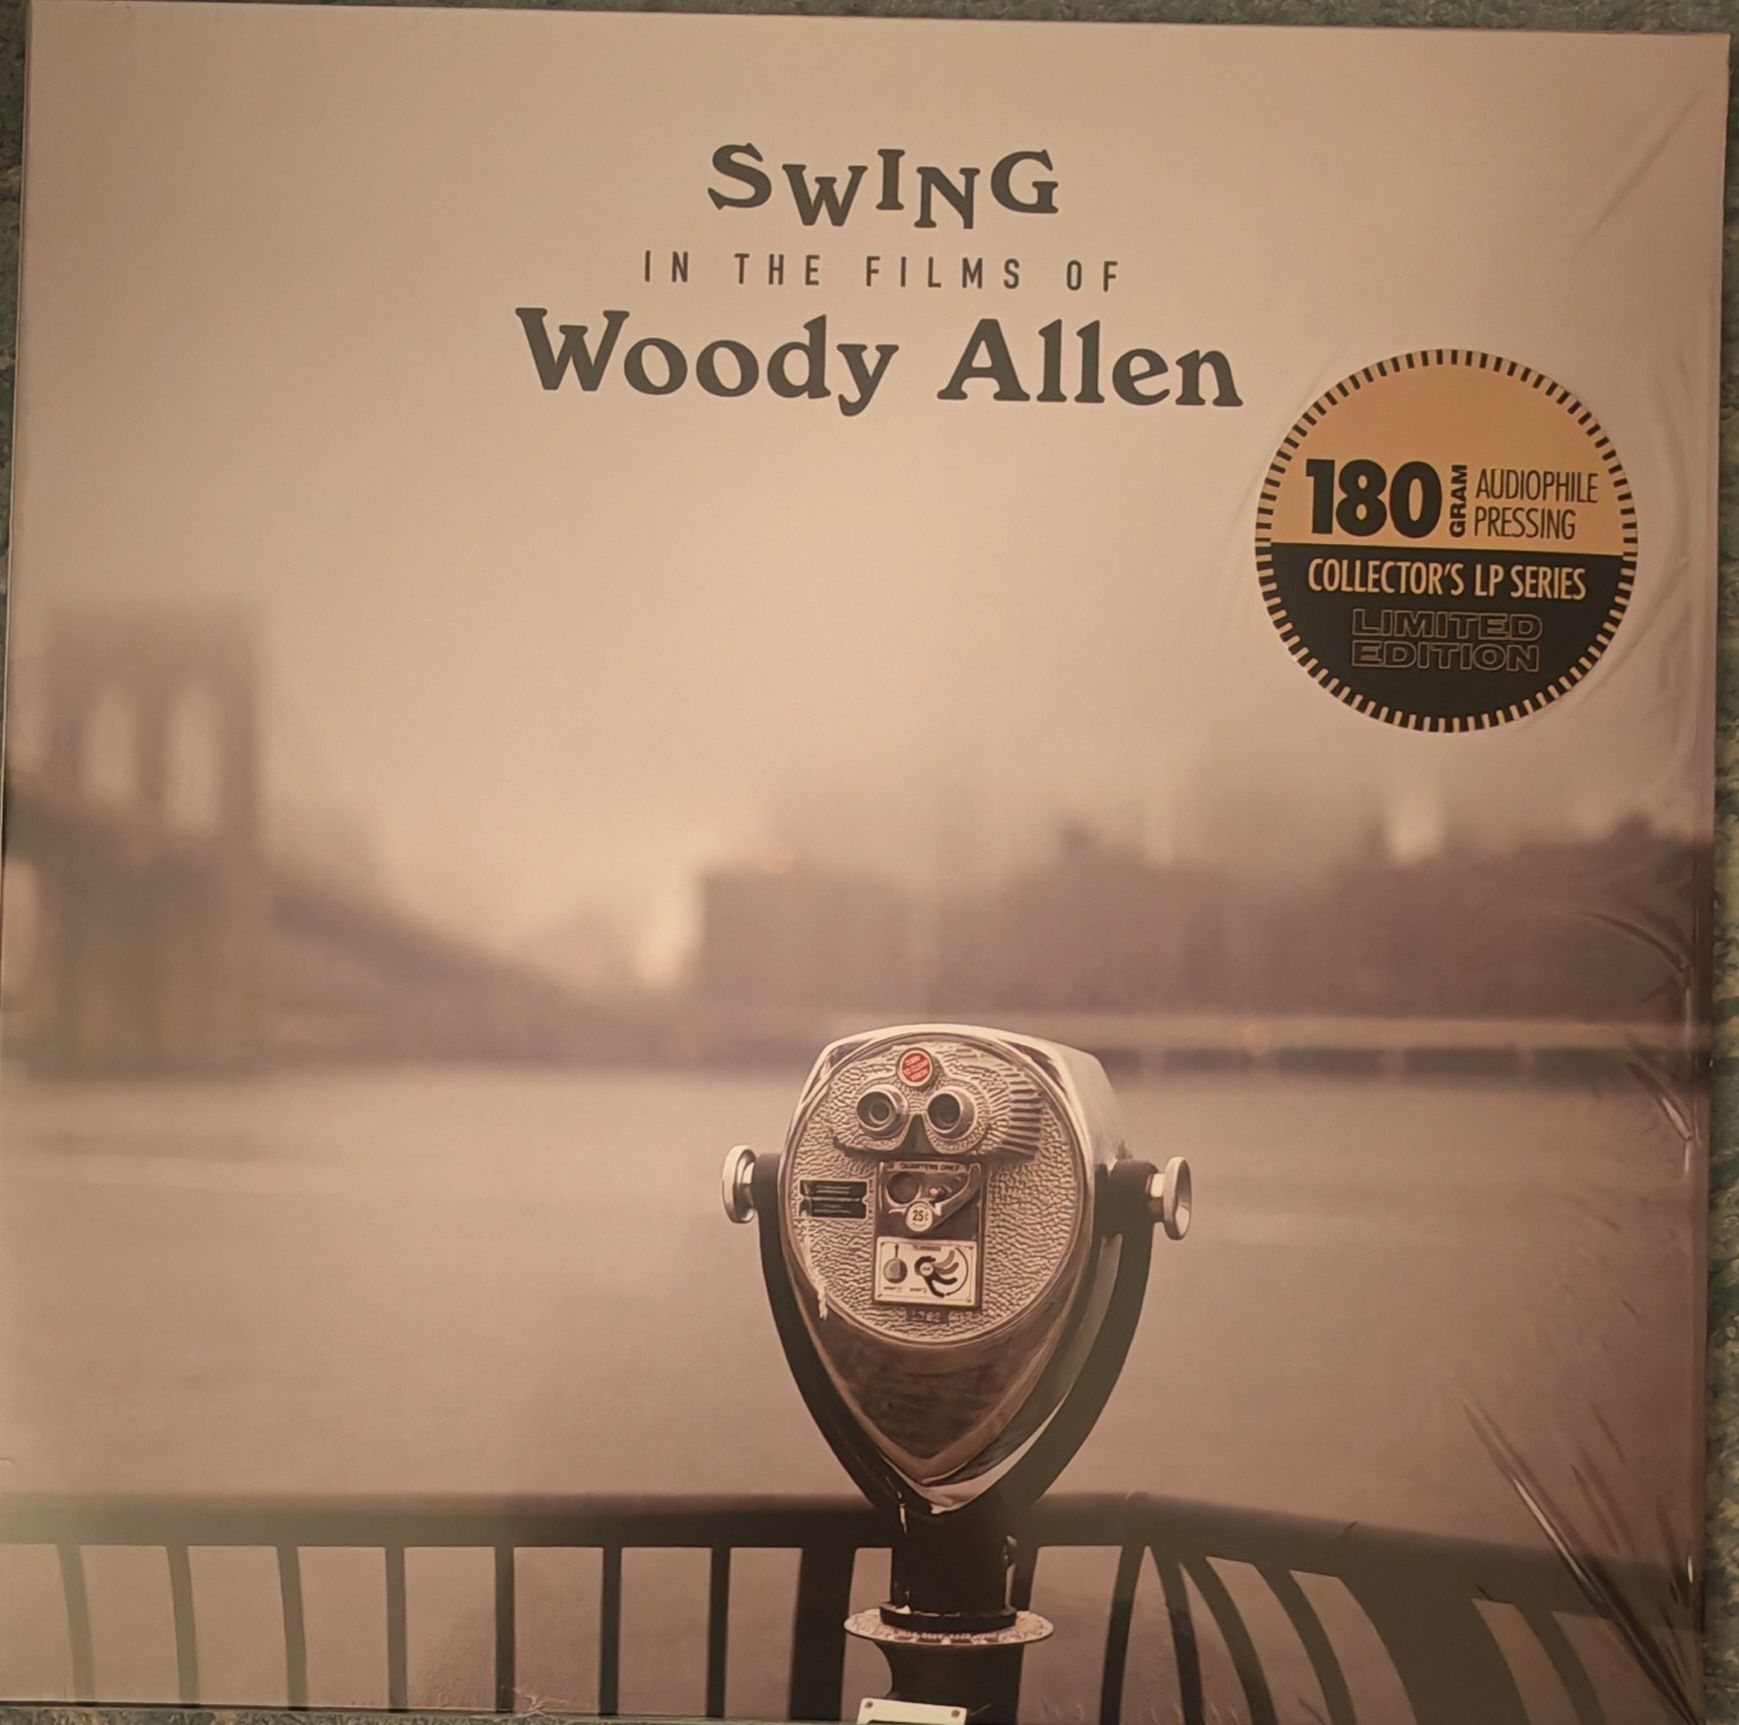 Swing In The Films Of Woody Allen Vinil disco 180g audiophile pressing